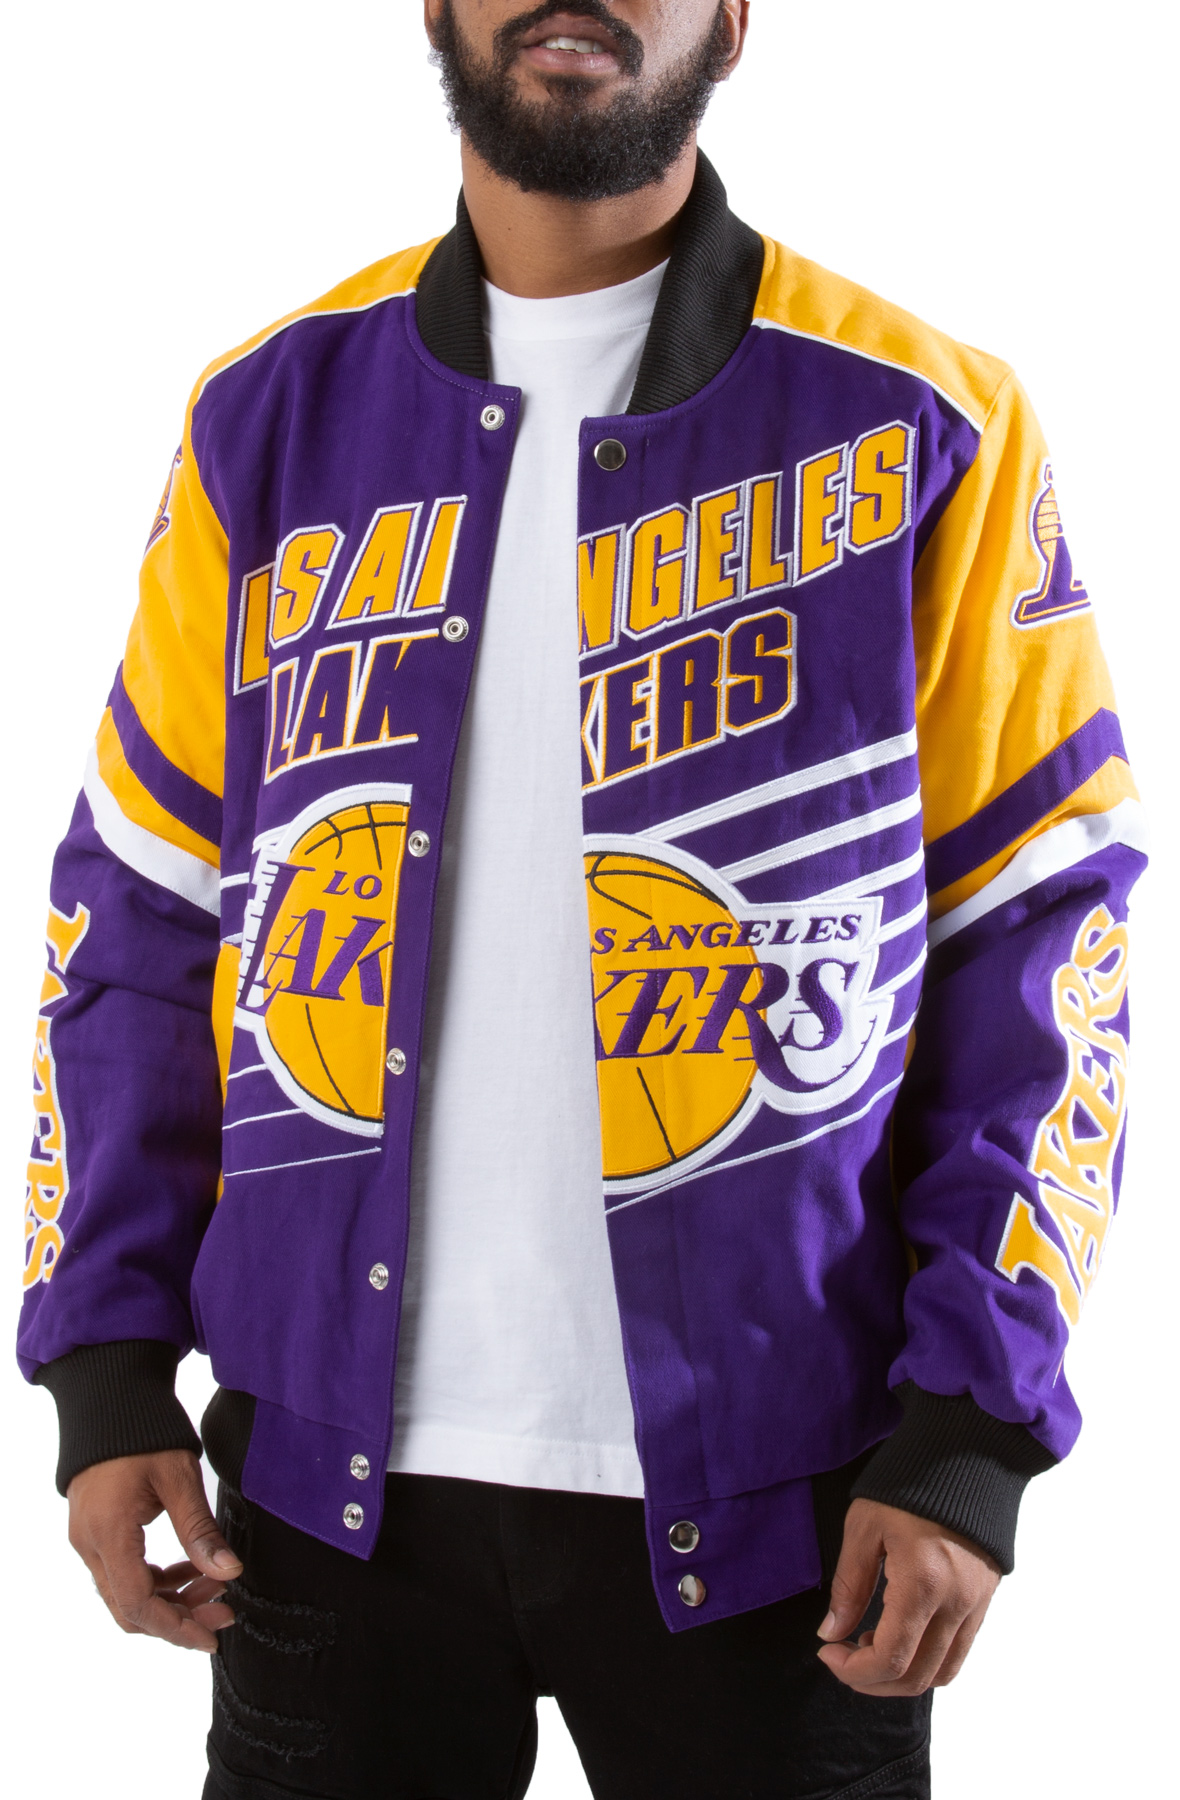 Los Angeles Lakers Starter The Pro II Half-Zip Jacket - Purple/Gold